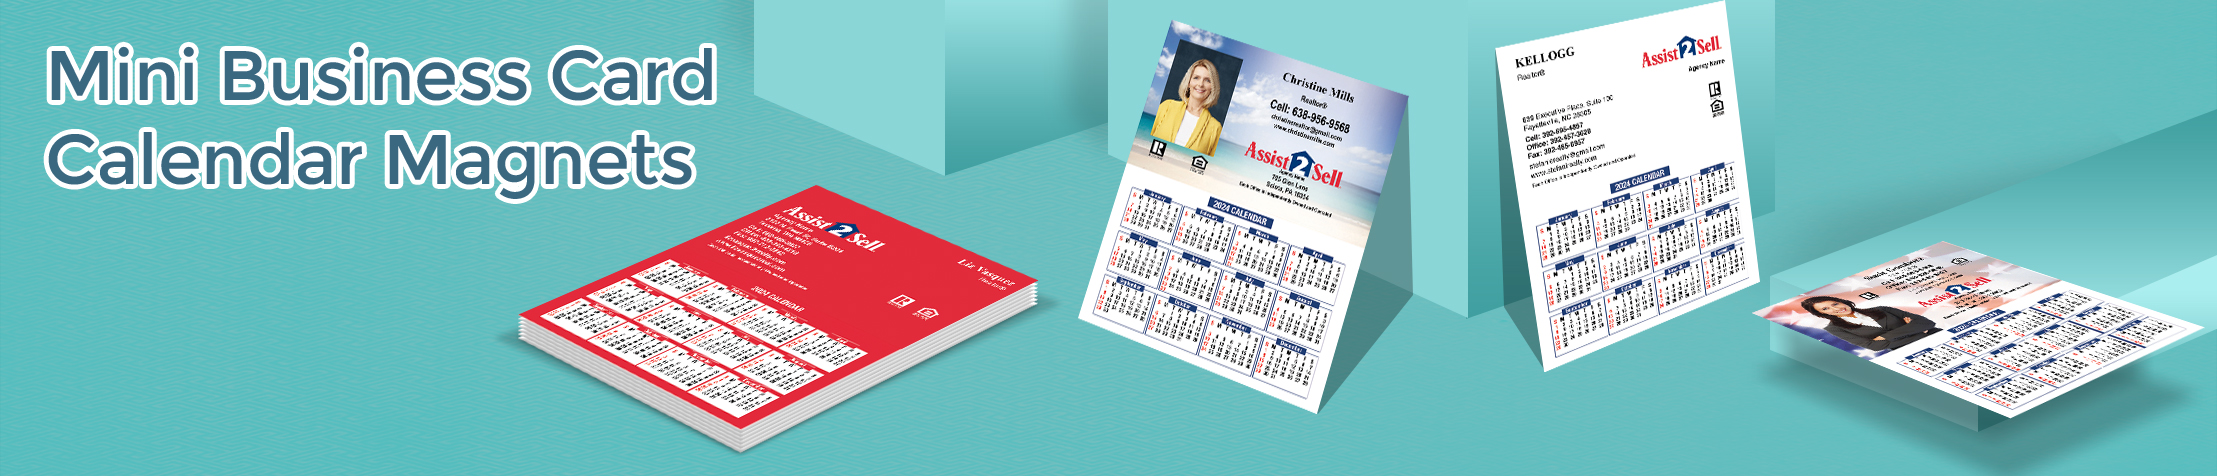 Assist2Sell Real Estate Mini Business Card Calendar Magnets - Assist2Sell Real Estate  personalized marketing materials | BestPrintBuy.com